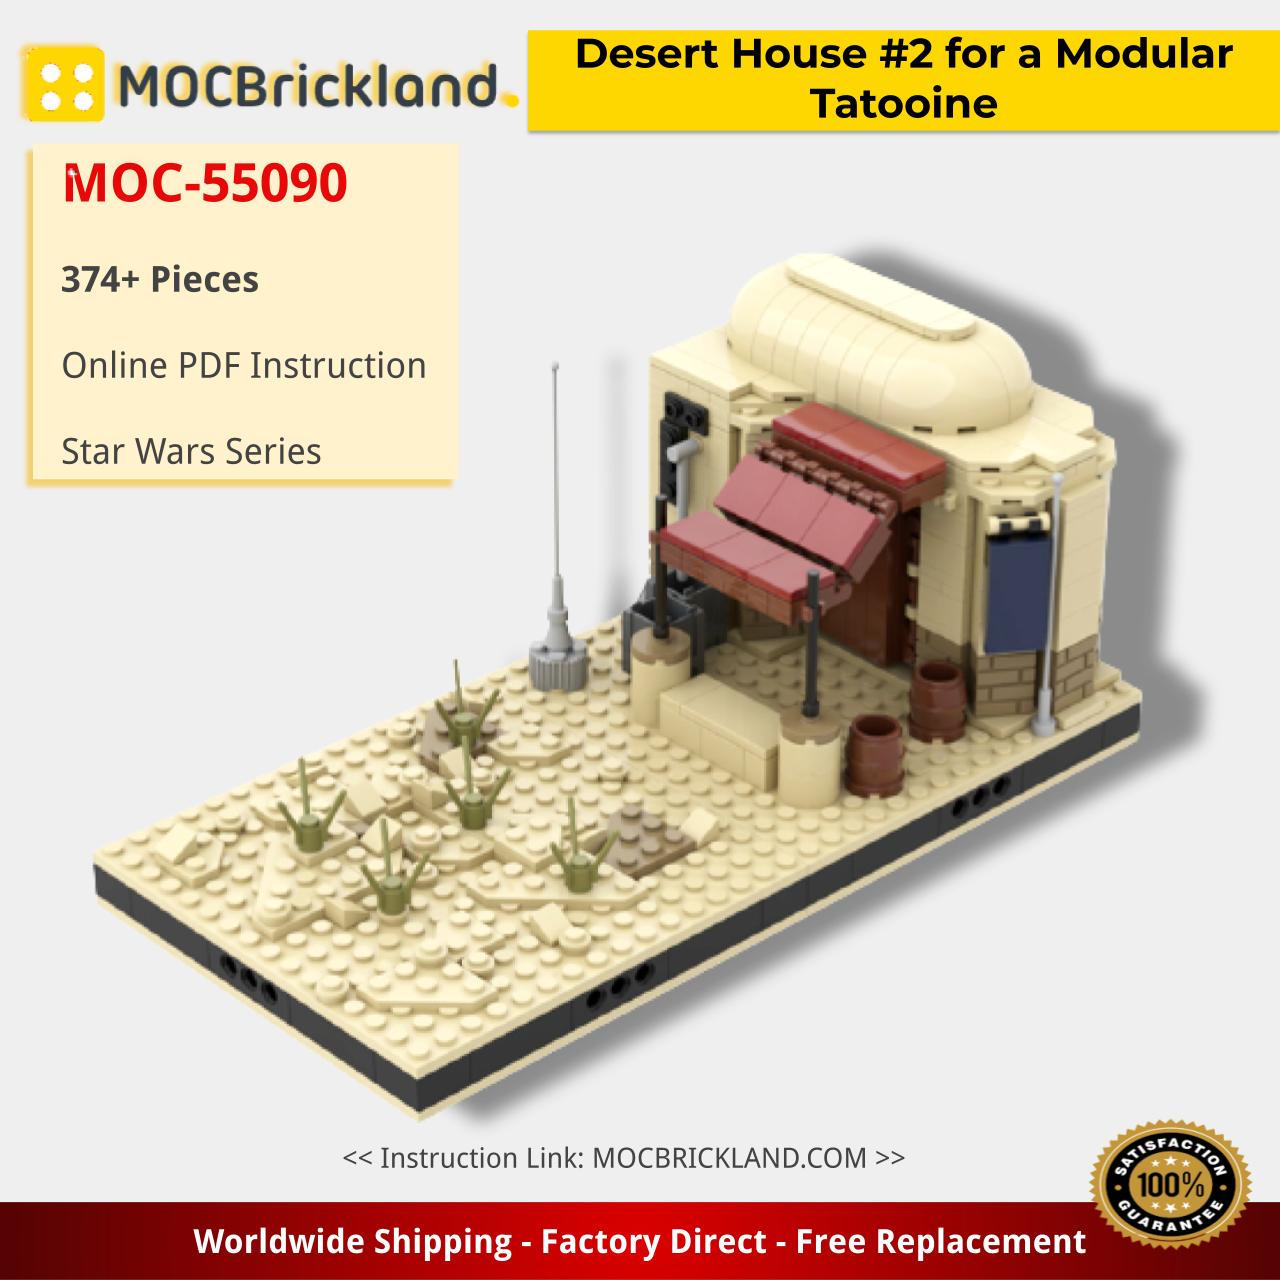 star wars moc 55090 desert house 2 for a modular tatooine by gabizon mocbrickland 3648